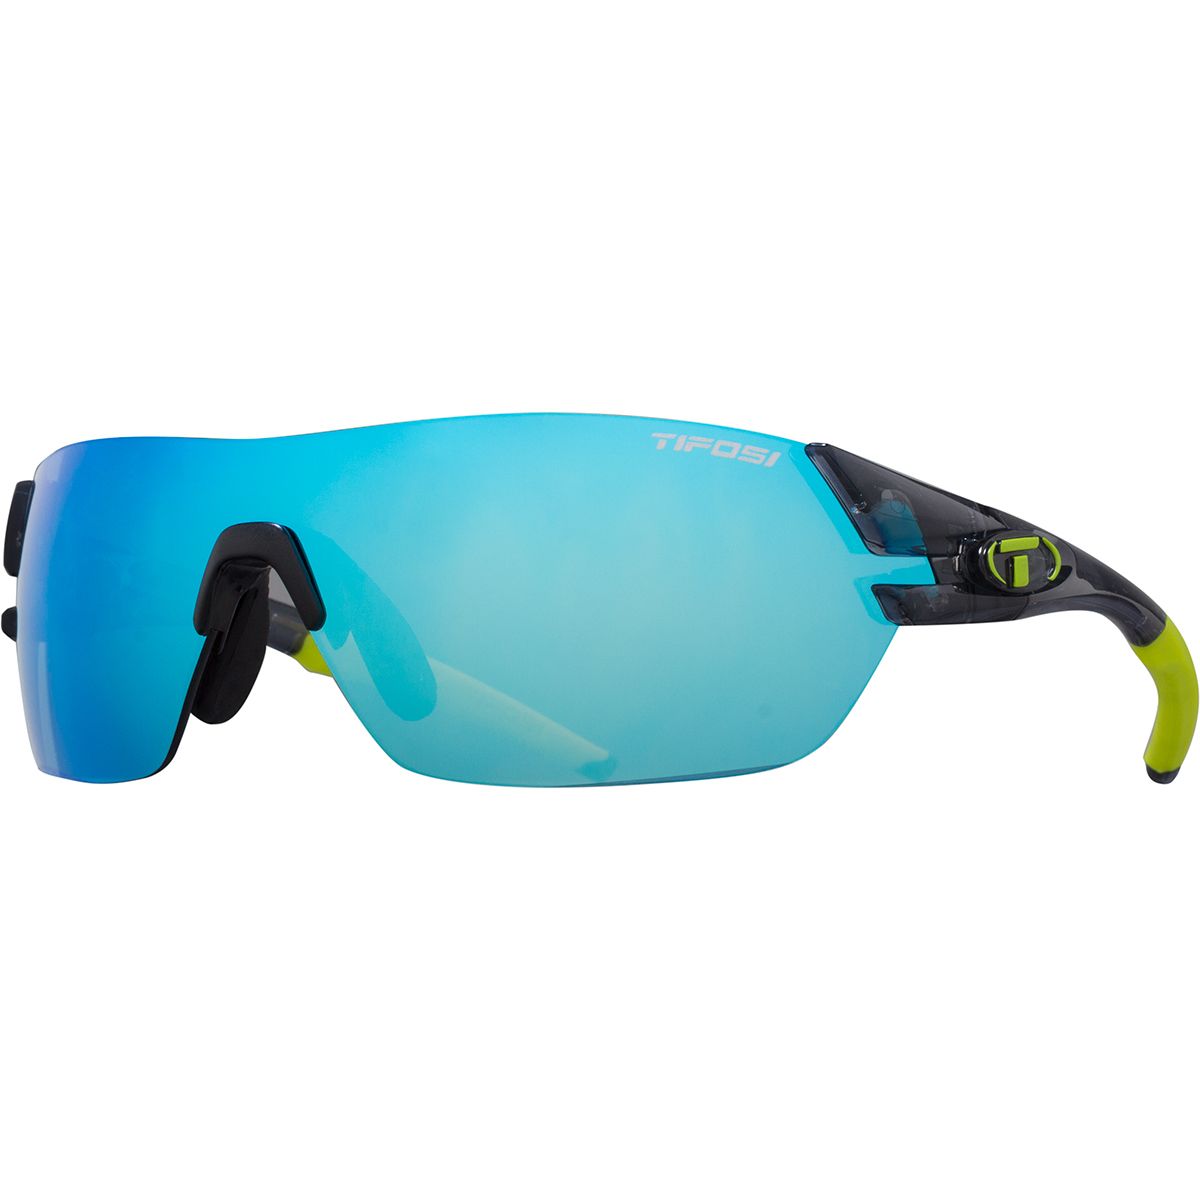 NEW TrackWhite & Black Tifosi Cycling Glasses Bright Blue Lens 